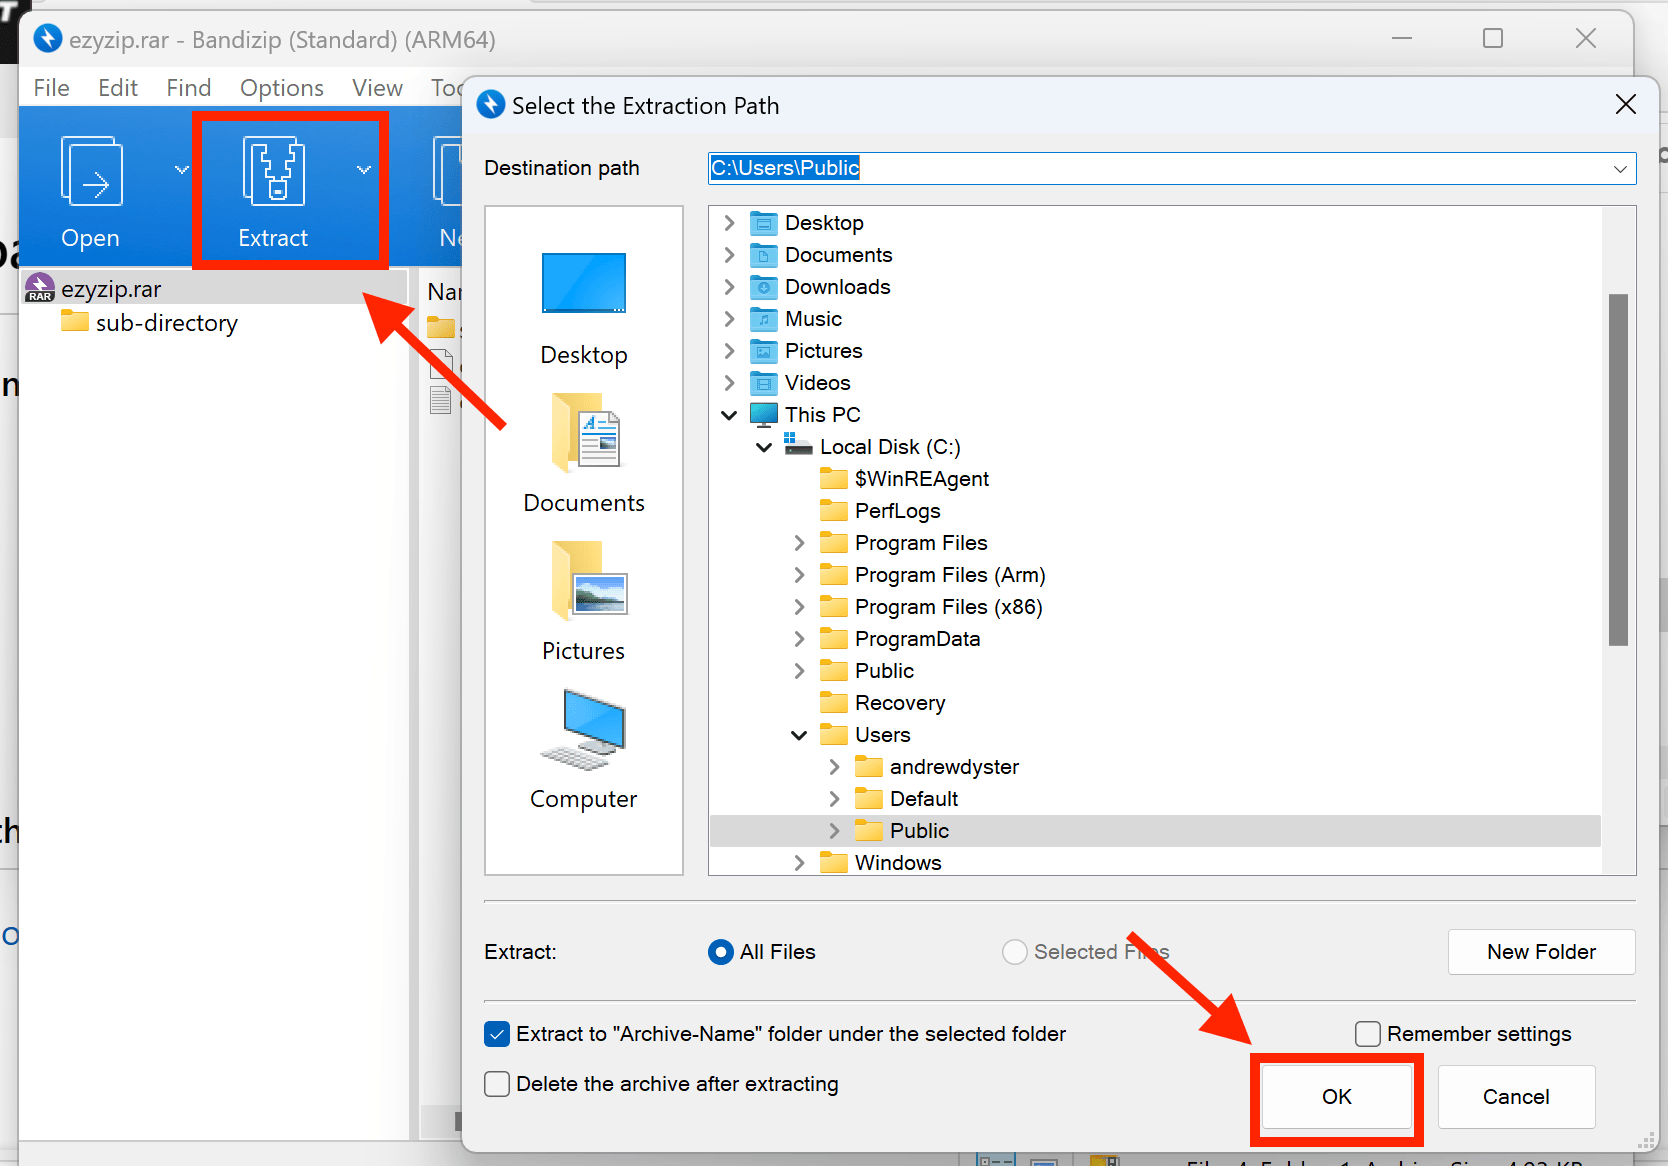 How To Open RAR Files Using Bandizip: Step 5